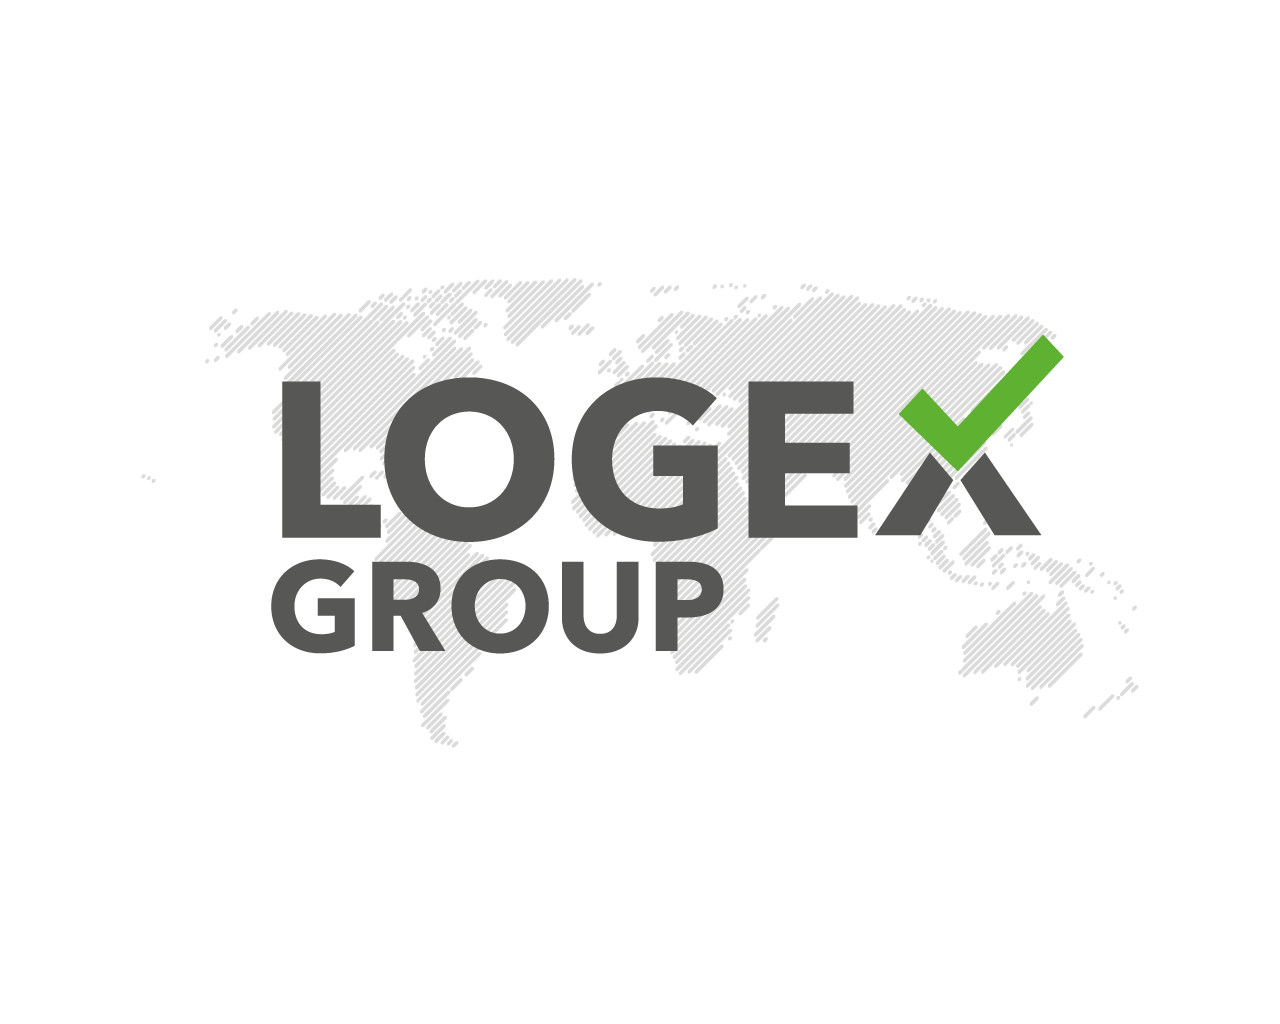 Logex Group